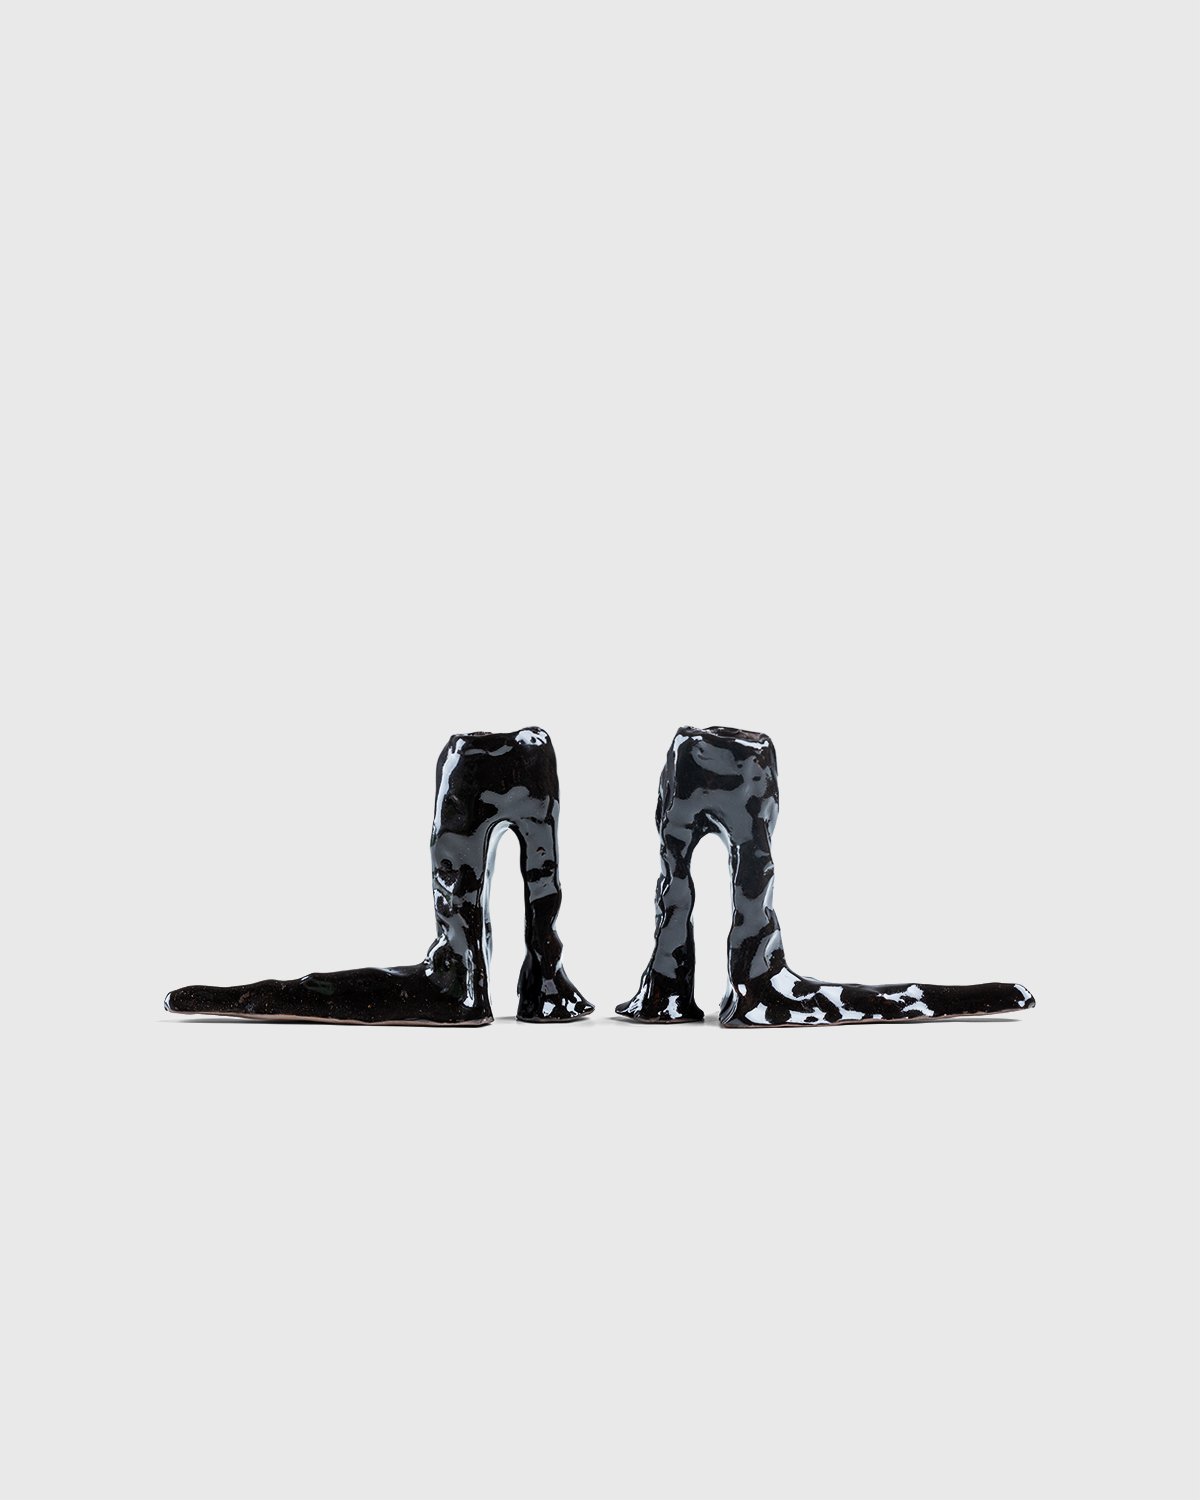 Laura Welker - Hot Legs Candleholders Black - Lifestyle - Black - Image 1